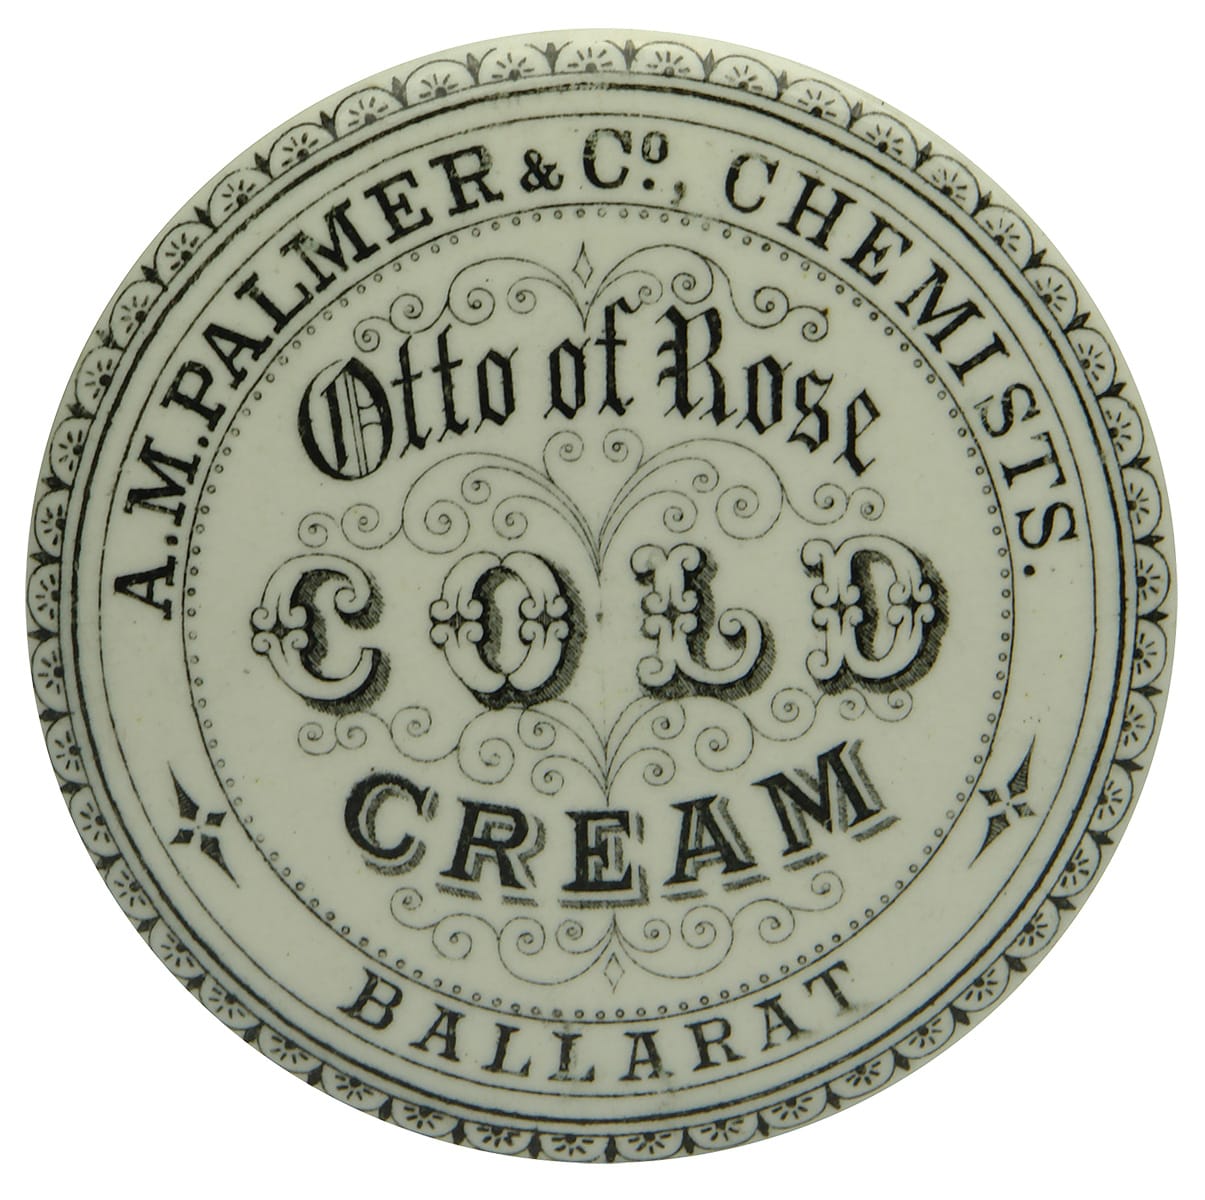 Palmer Chemists Ballarat Cold Cream Antique Pot Lid